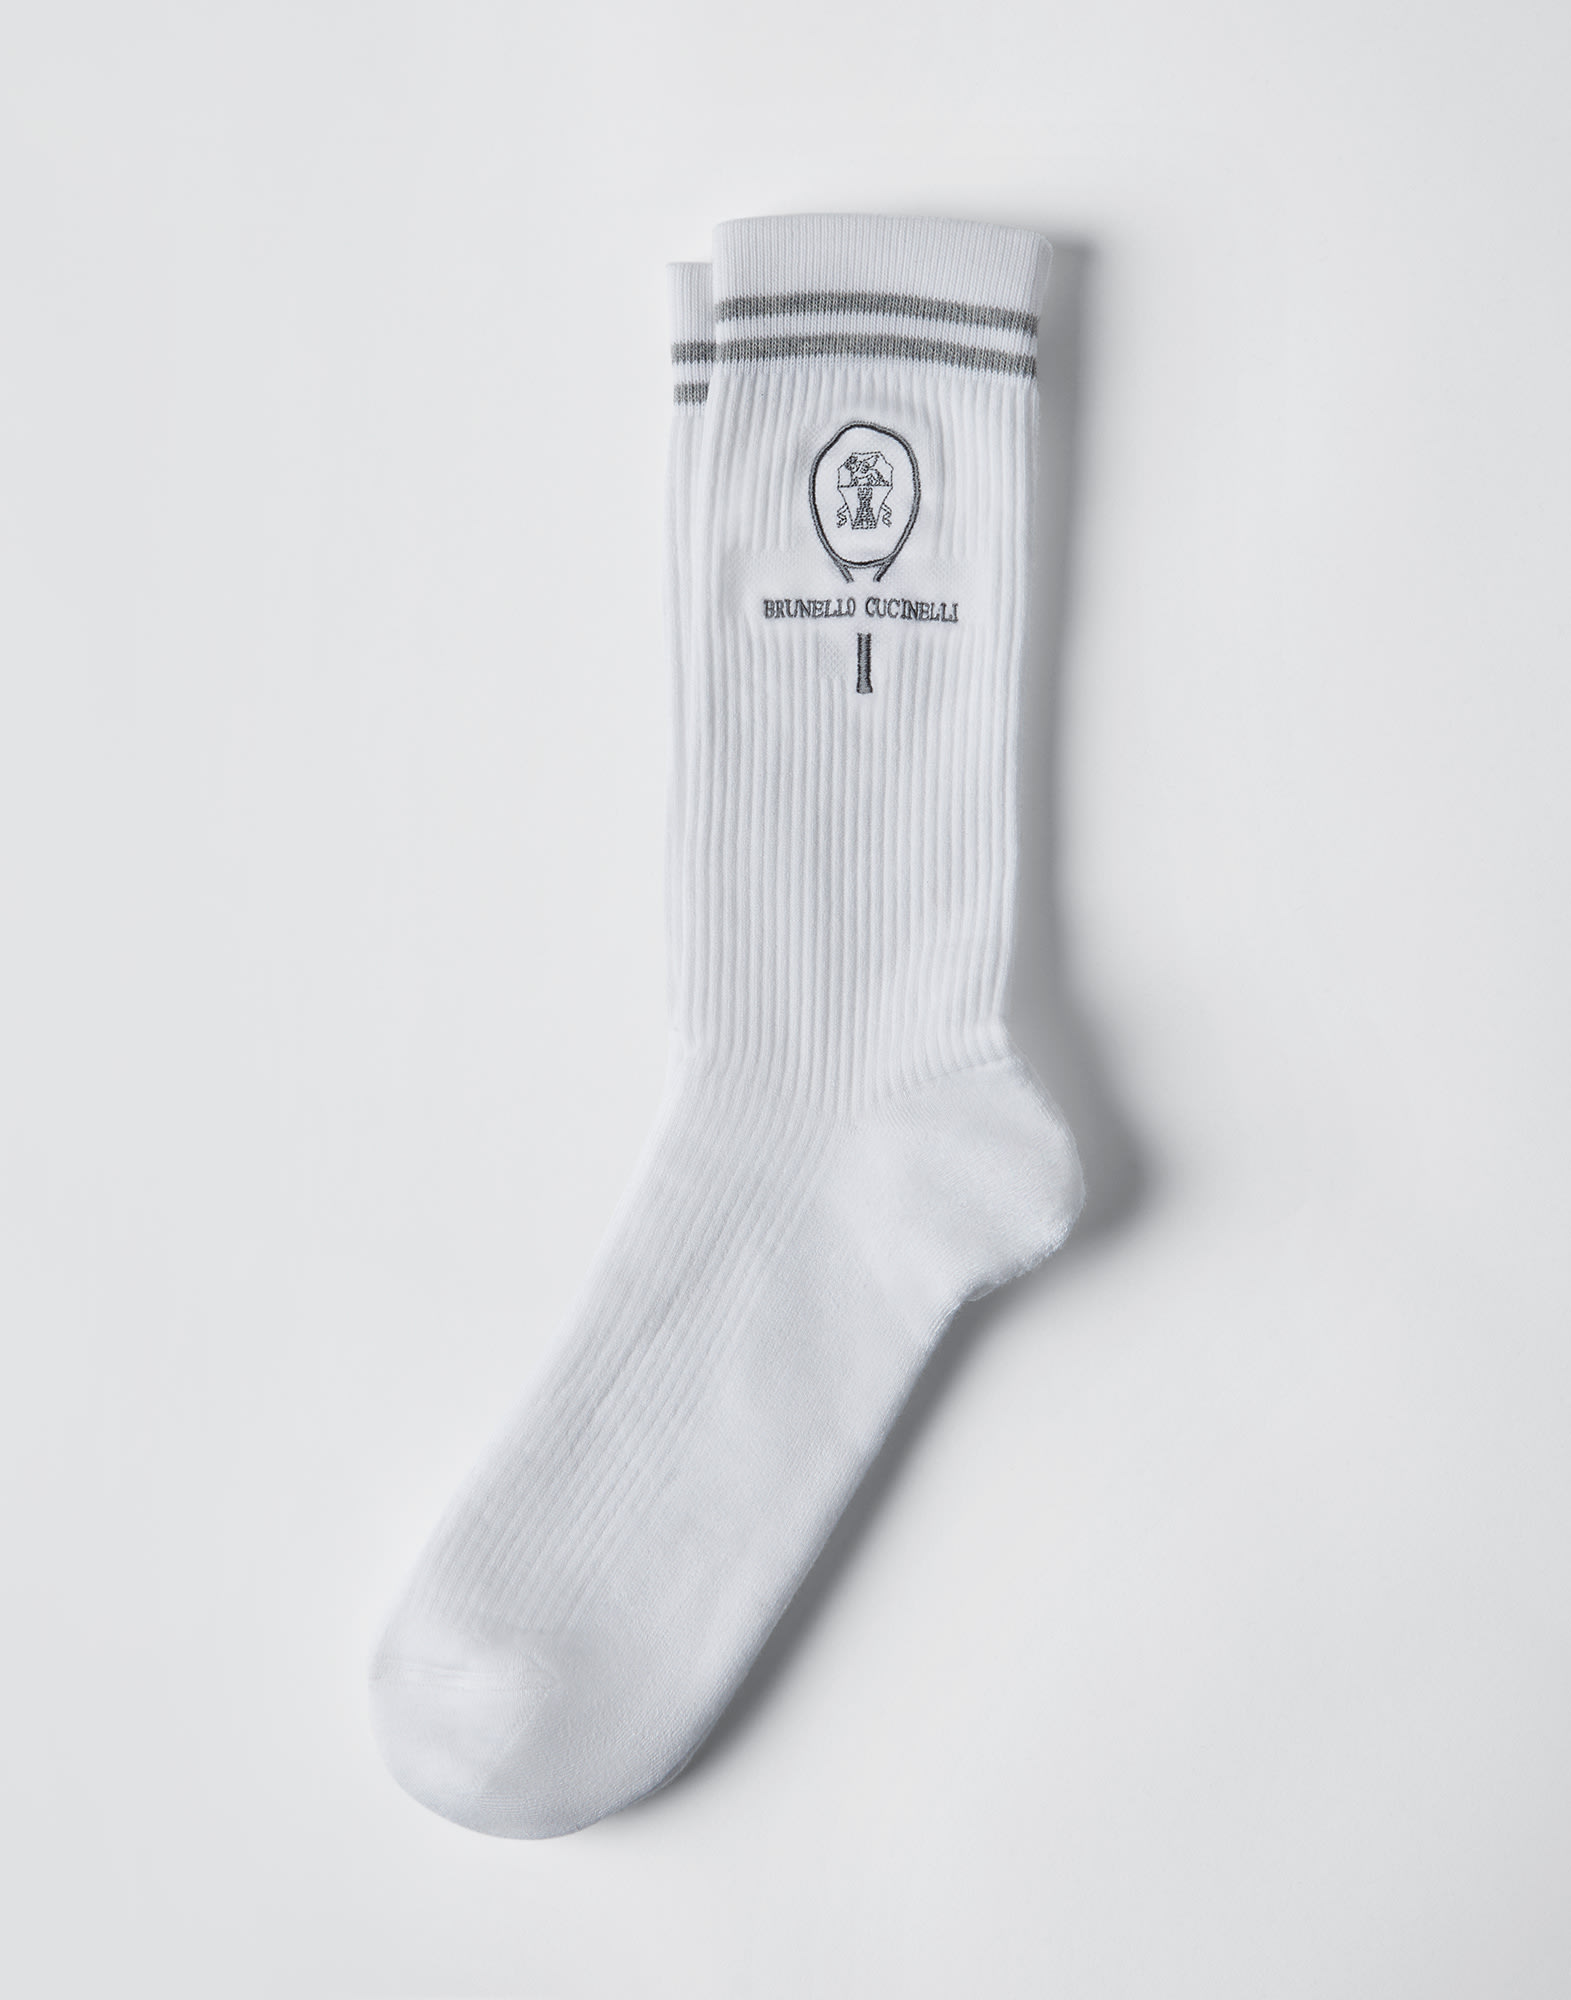 Tennis商标装饰袜子